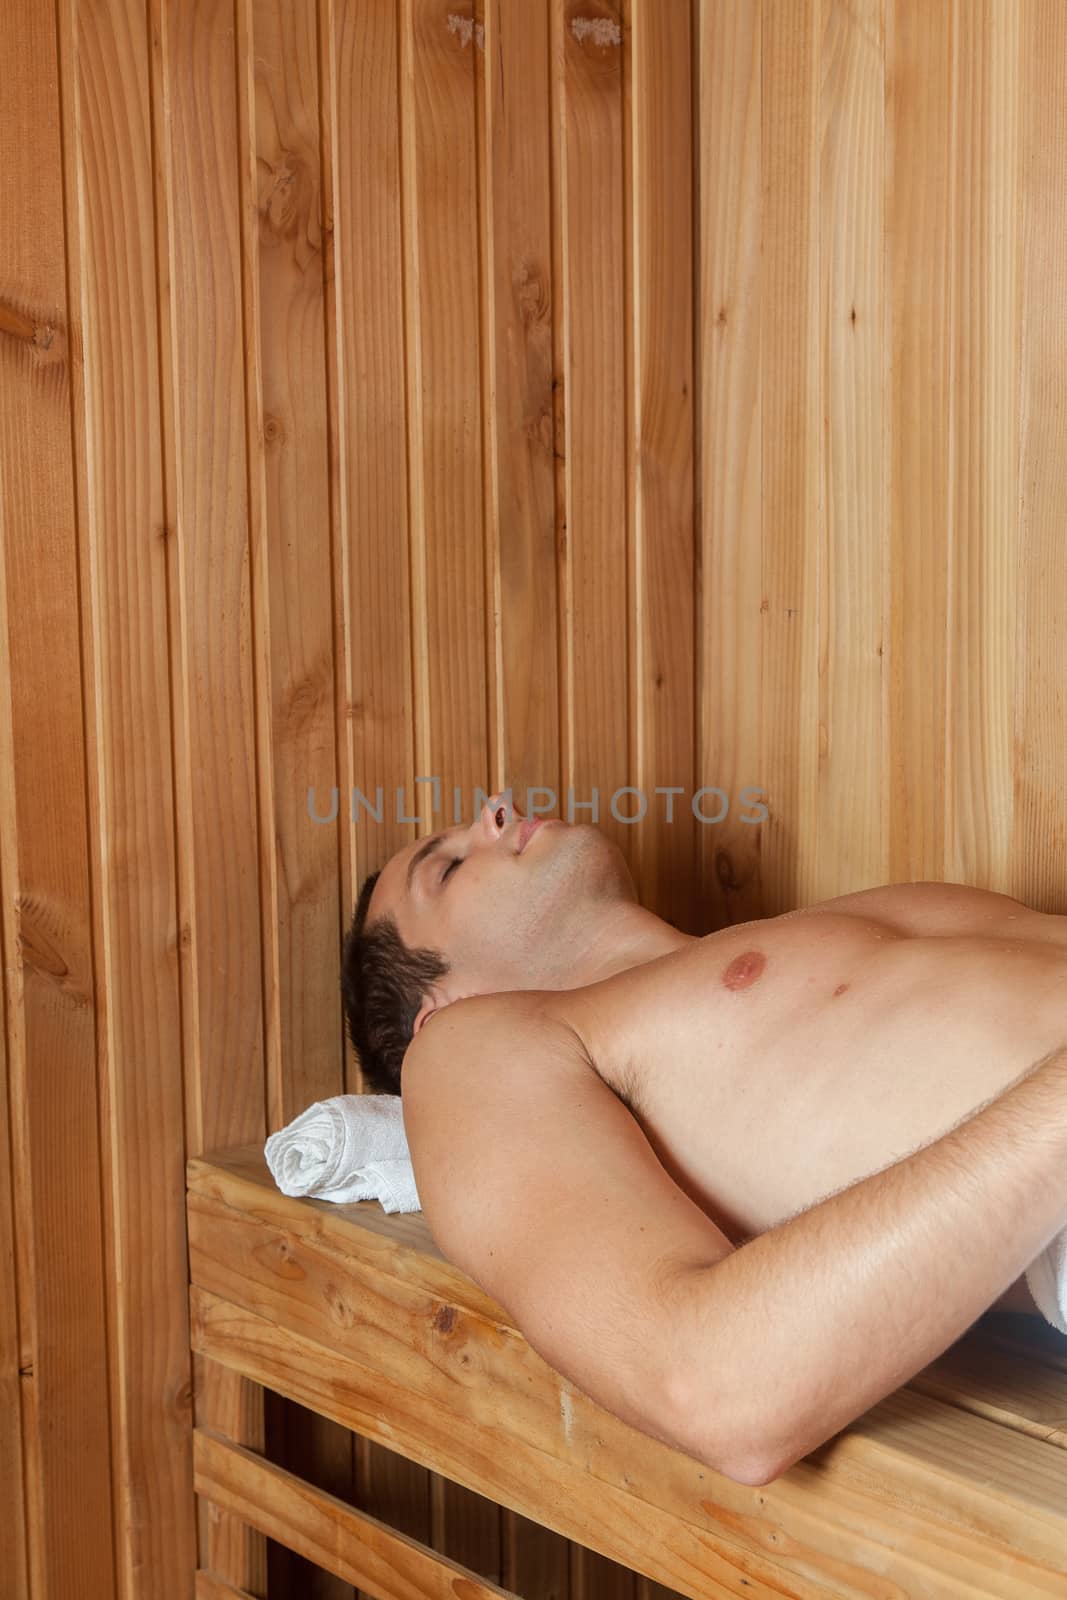 Guy laid inside the sauna